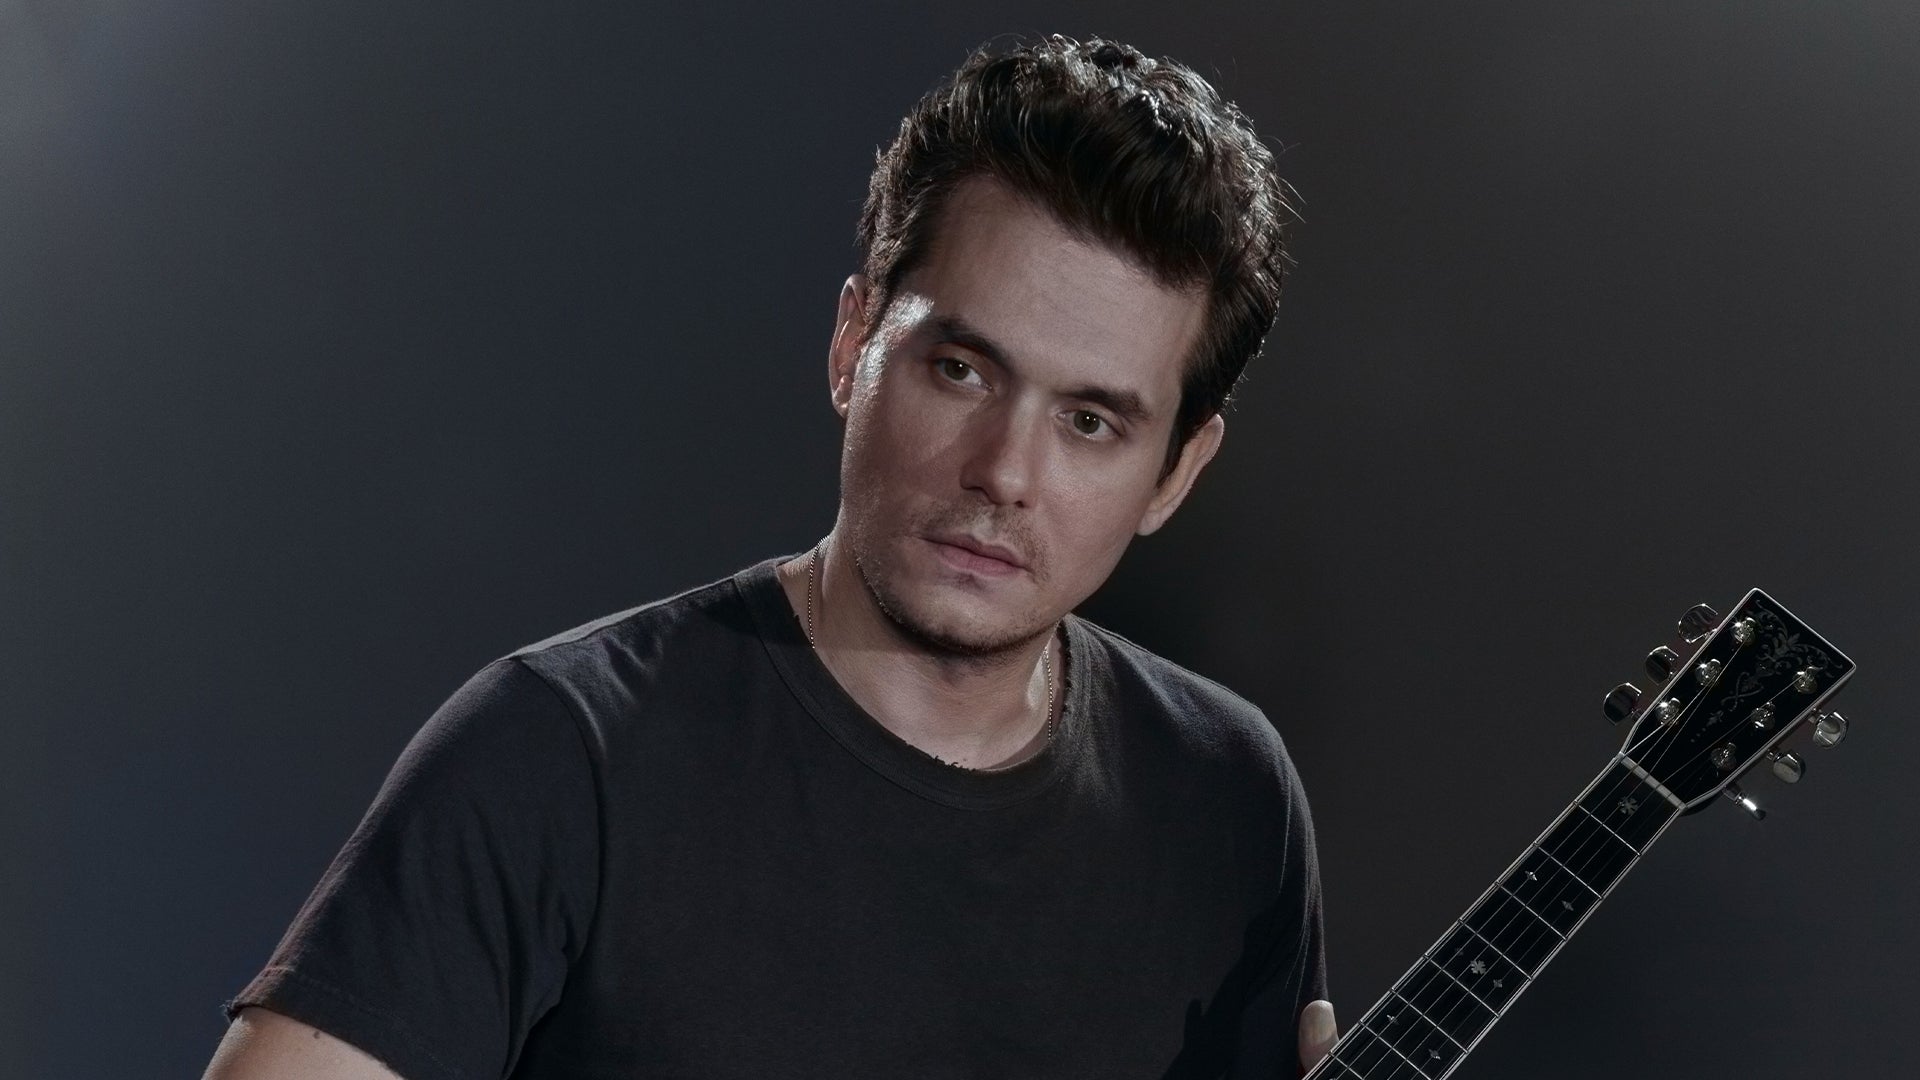 John Mayer wearing a black shirt while holding a guitar